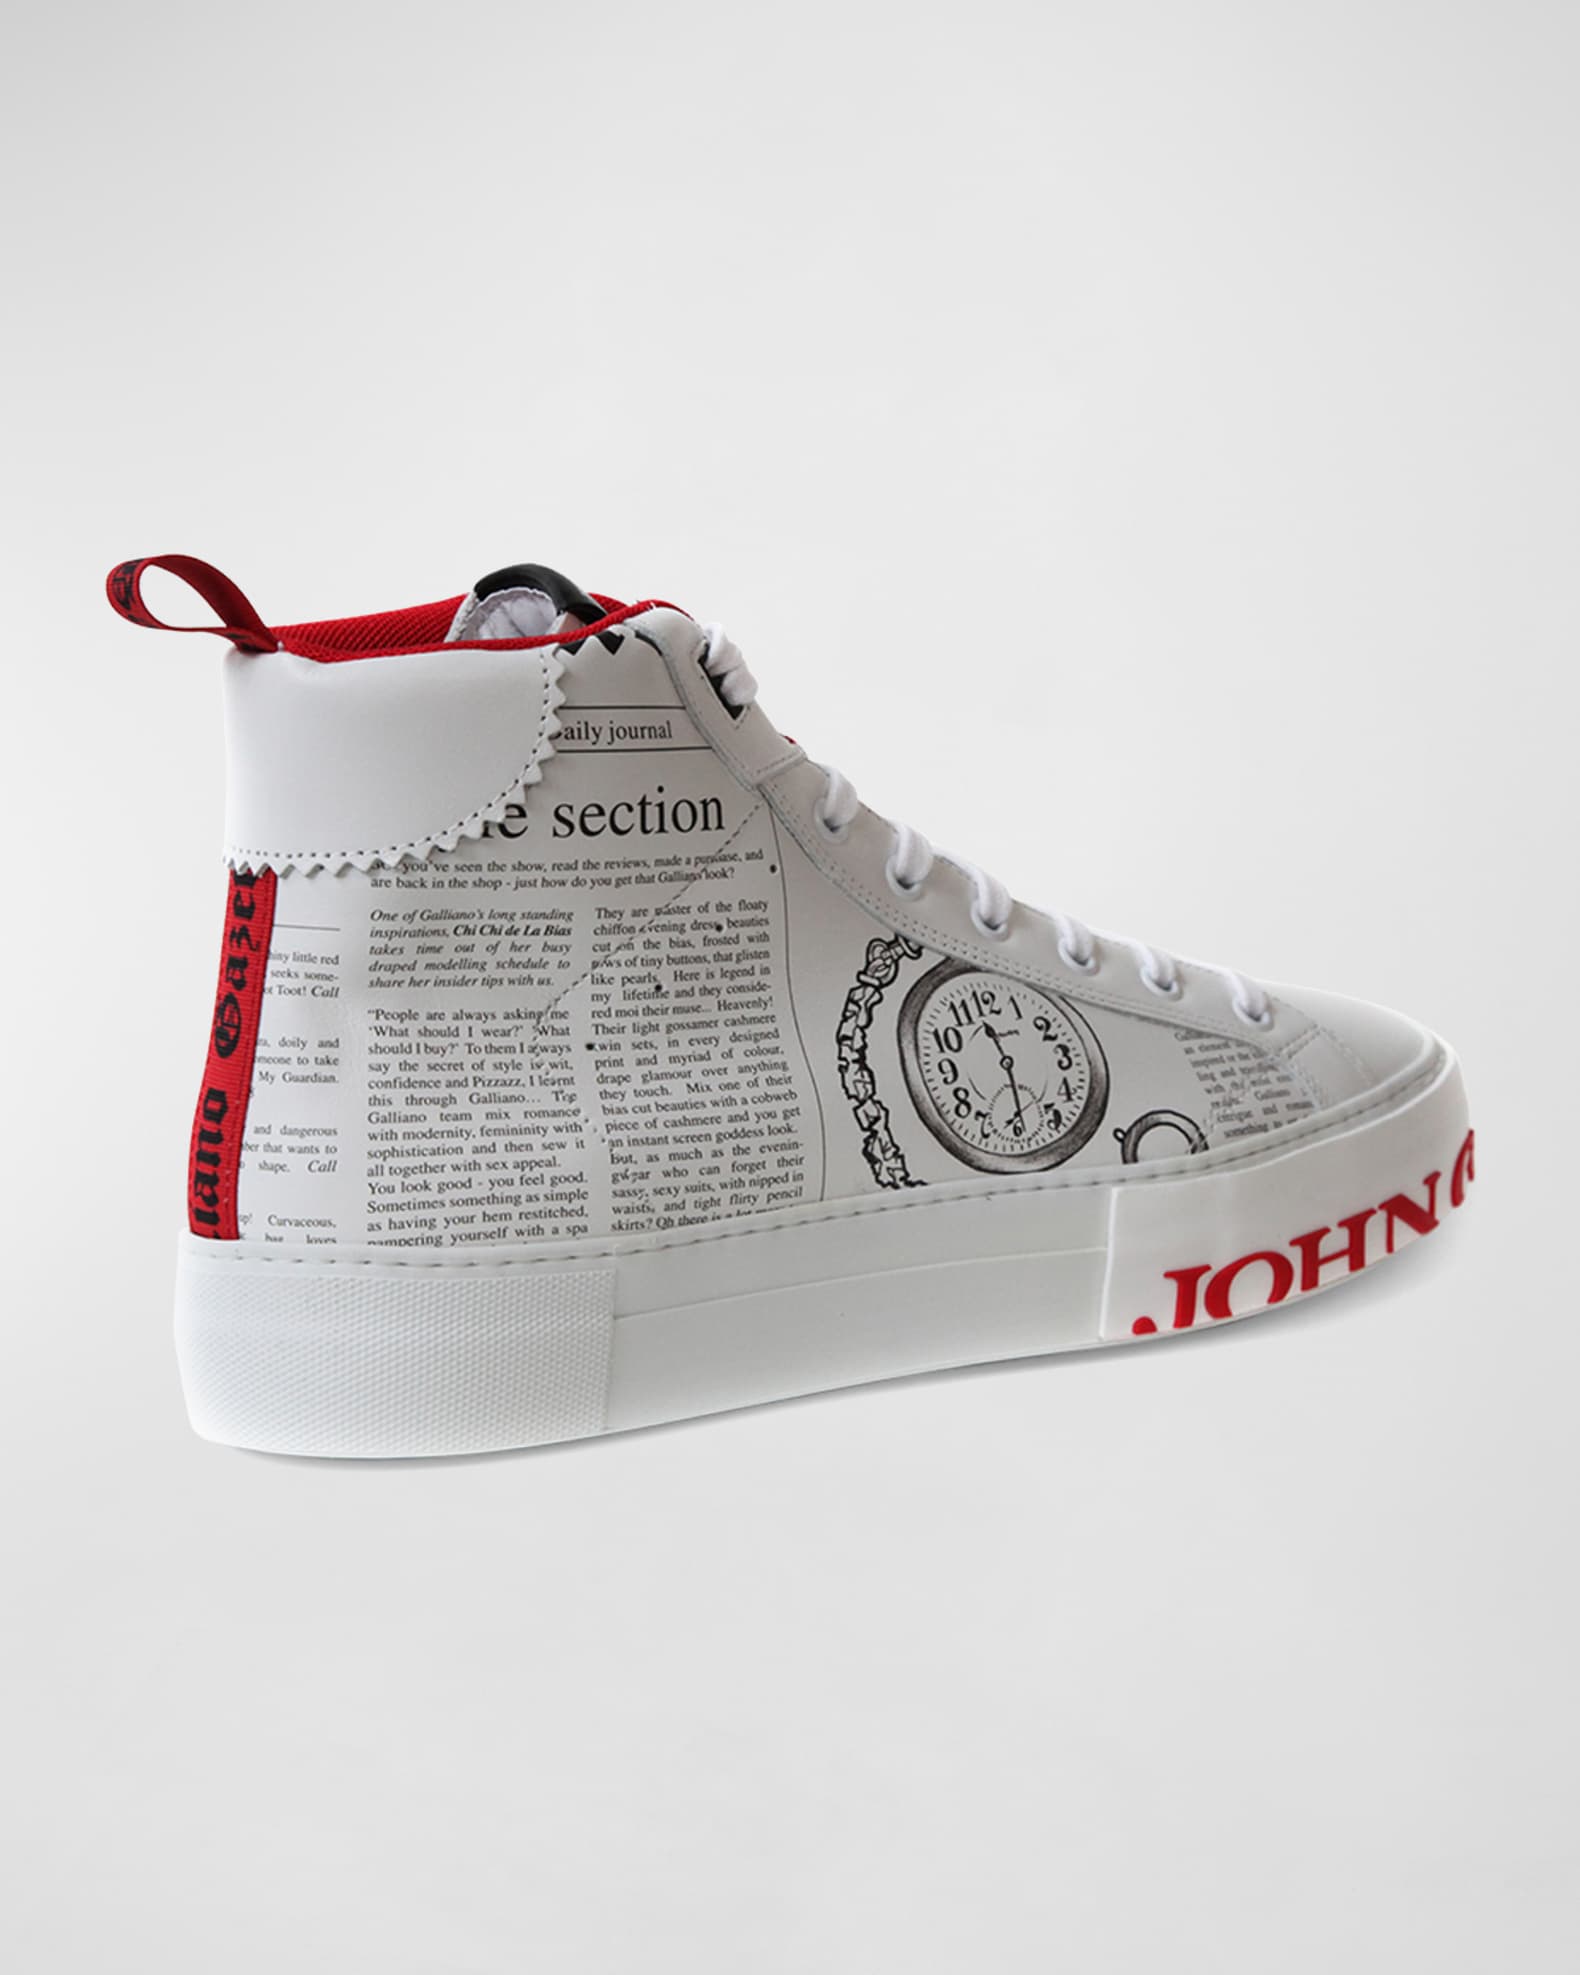 Men's Shoes Sneakers JOHN GALLIANO Paris 2496 Variante A Abrasiv  Bianco Leather